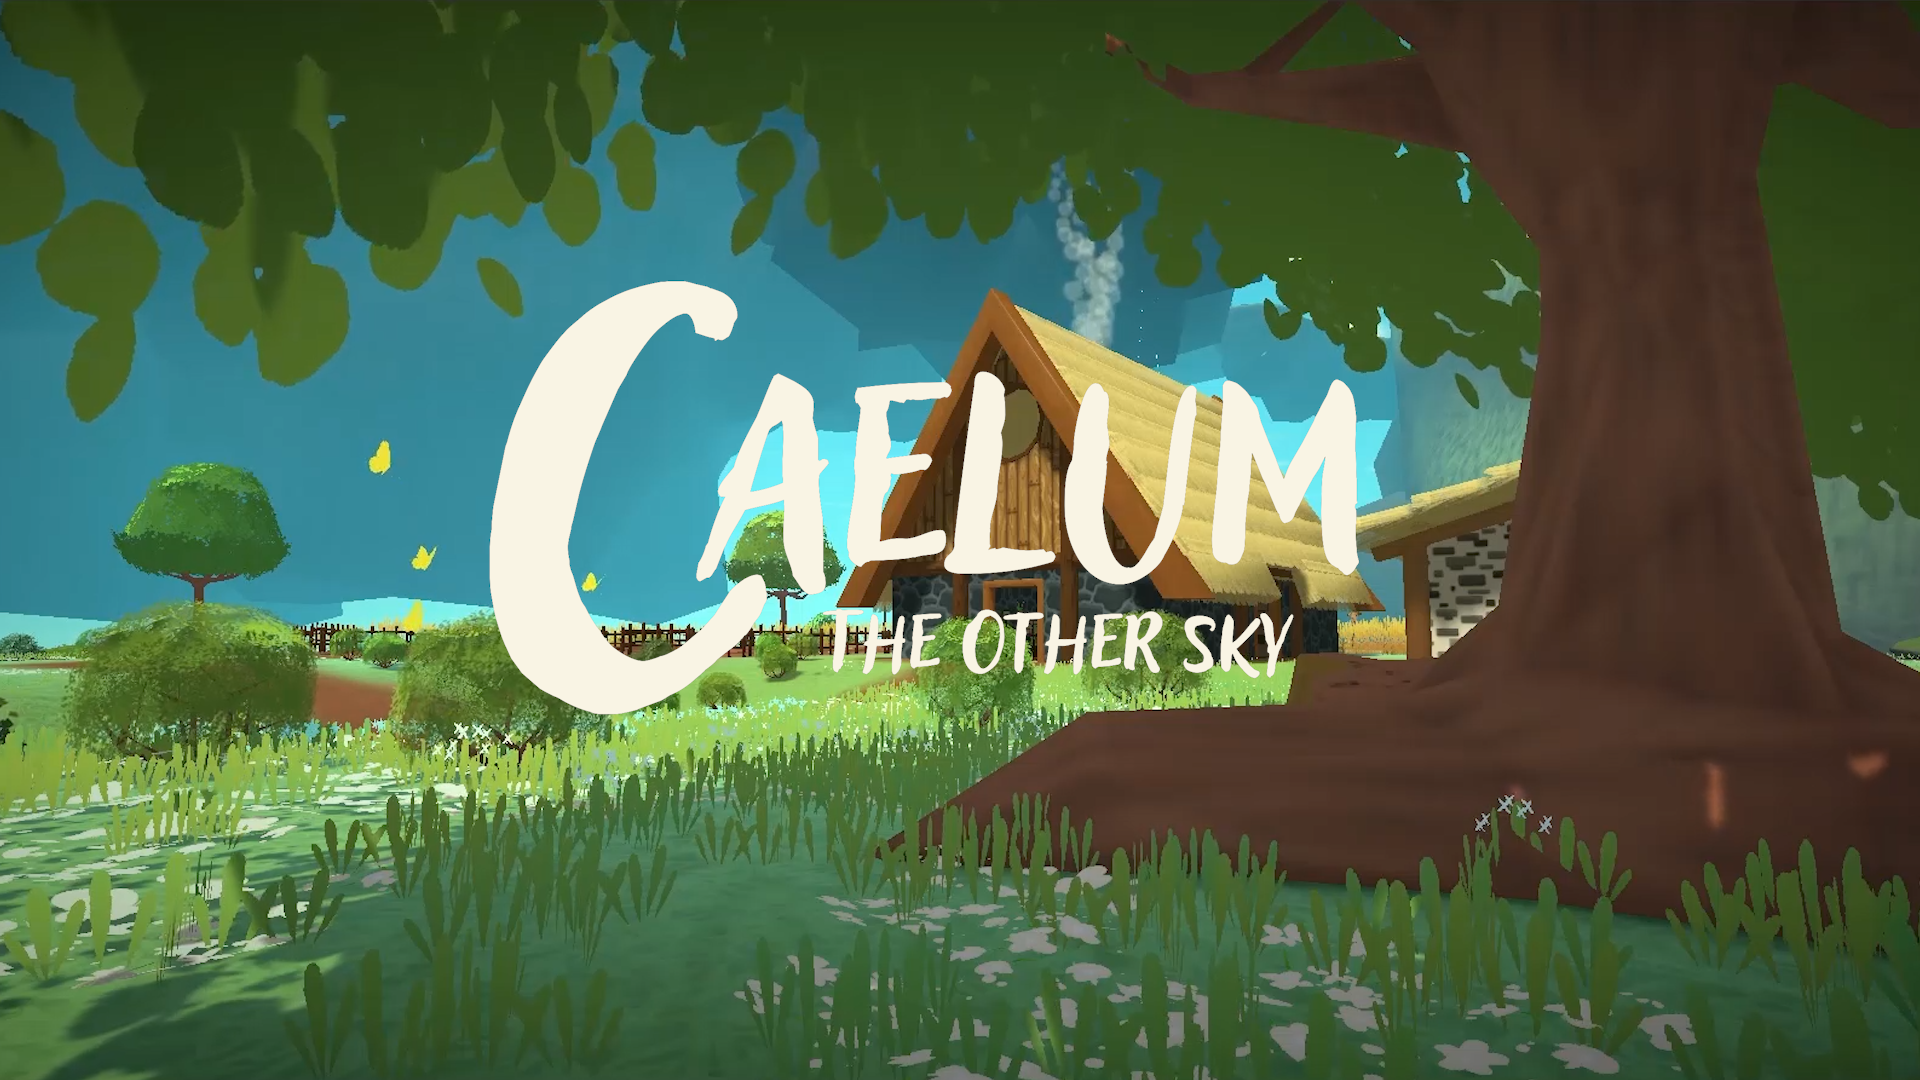 Caelum: The Other Sky